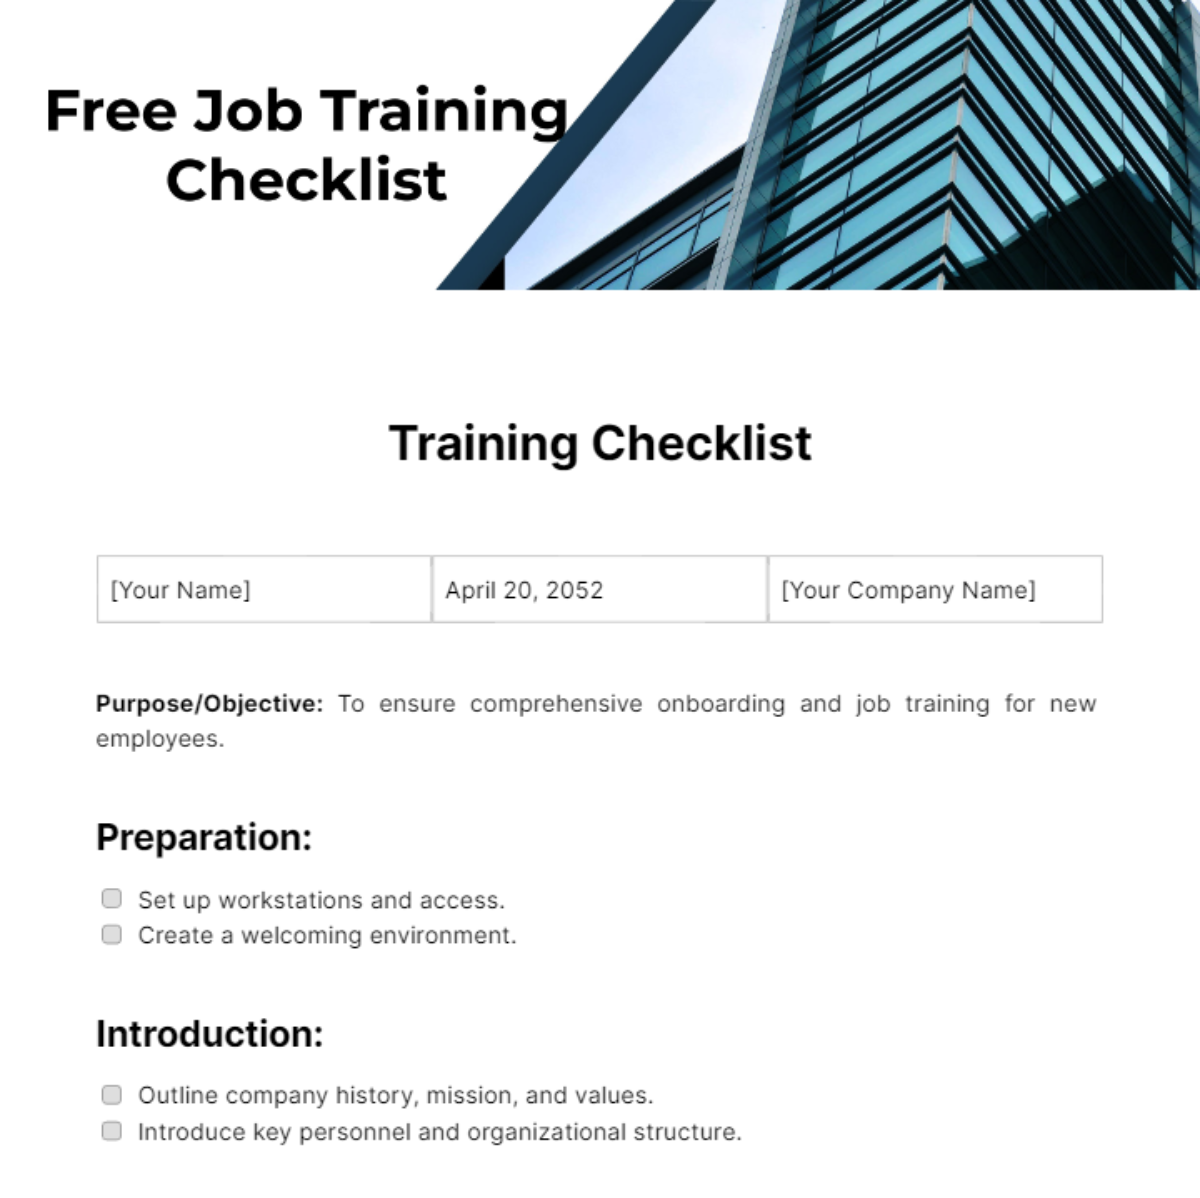 Free Job Training Checklist Template